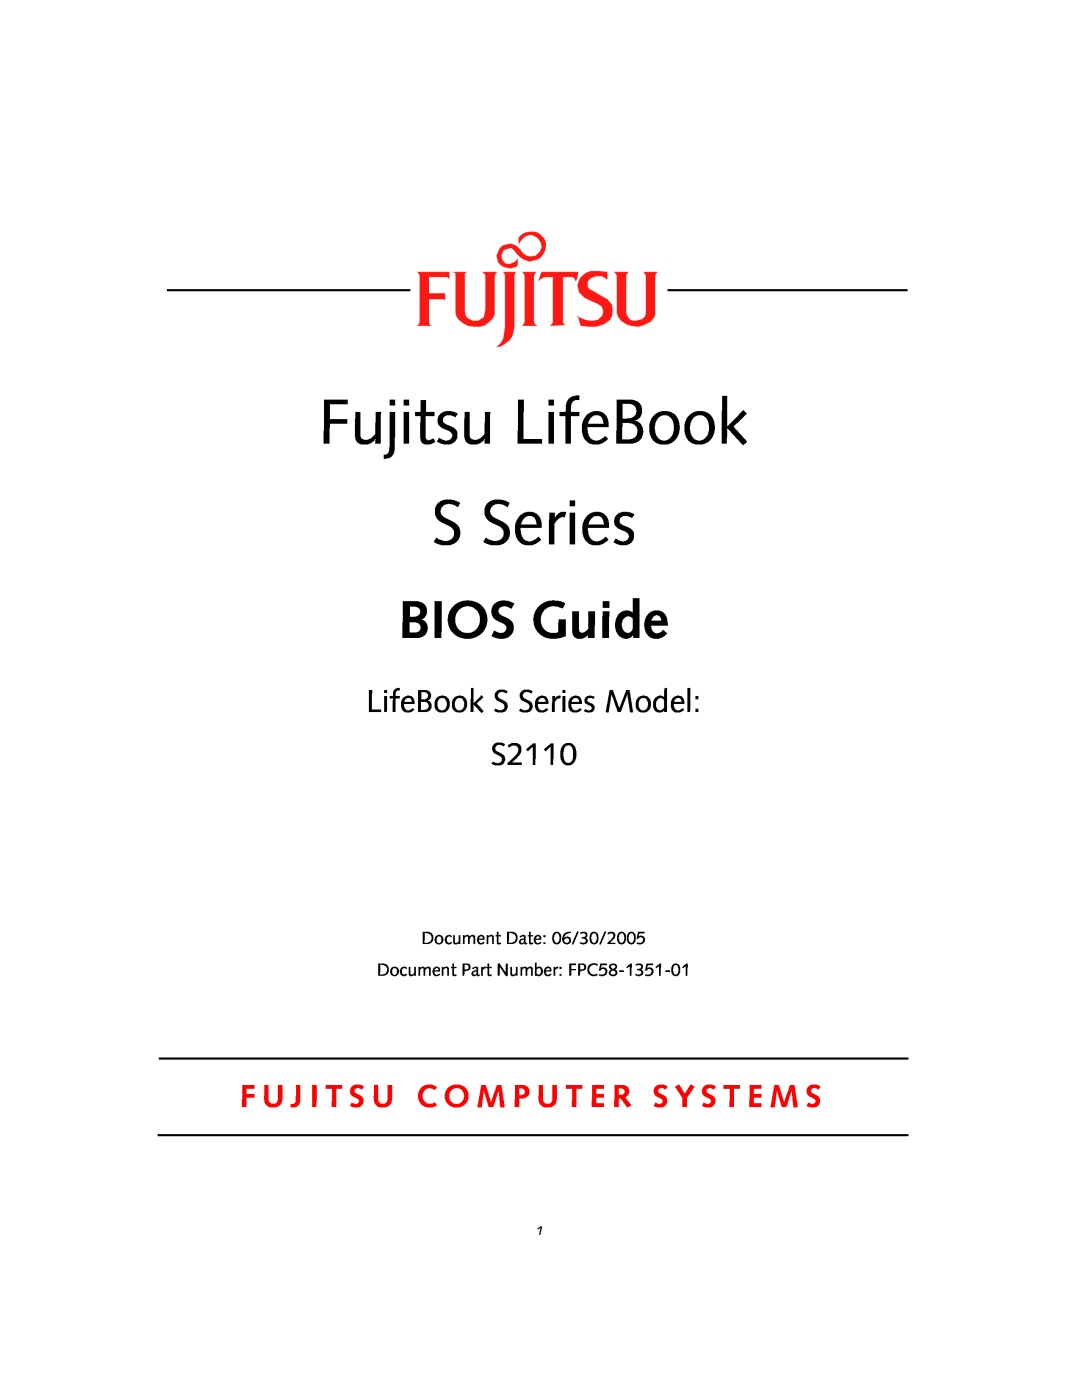 Fujitsu Siemens Computers manual Fujitsu LifeBook S Series, BIOS Guide, LifeBook S Series Model S2110 